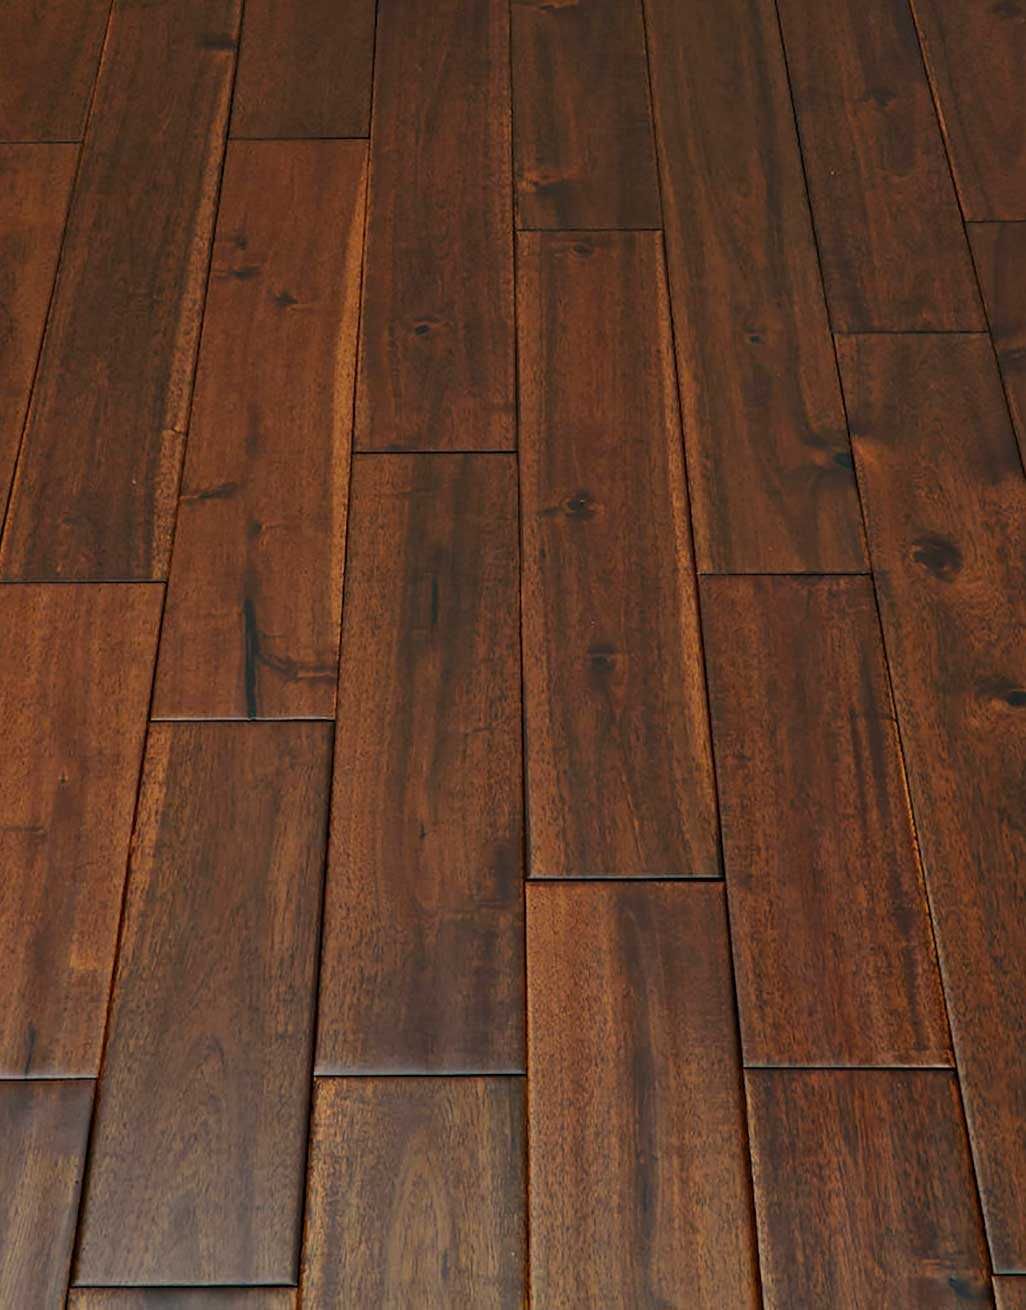 Deluxe Handsed Acacia Solid Wood, Acacia Solid Hardwood Flooring Reviews